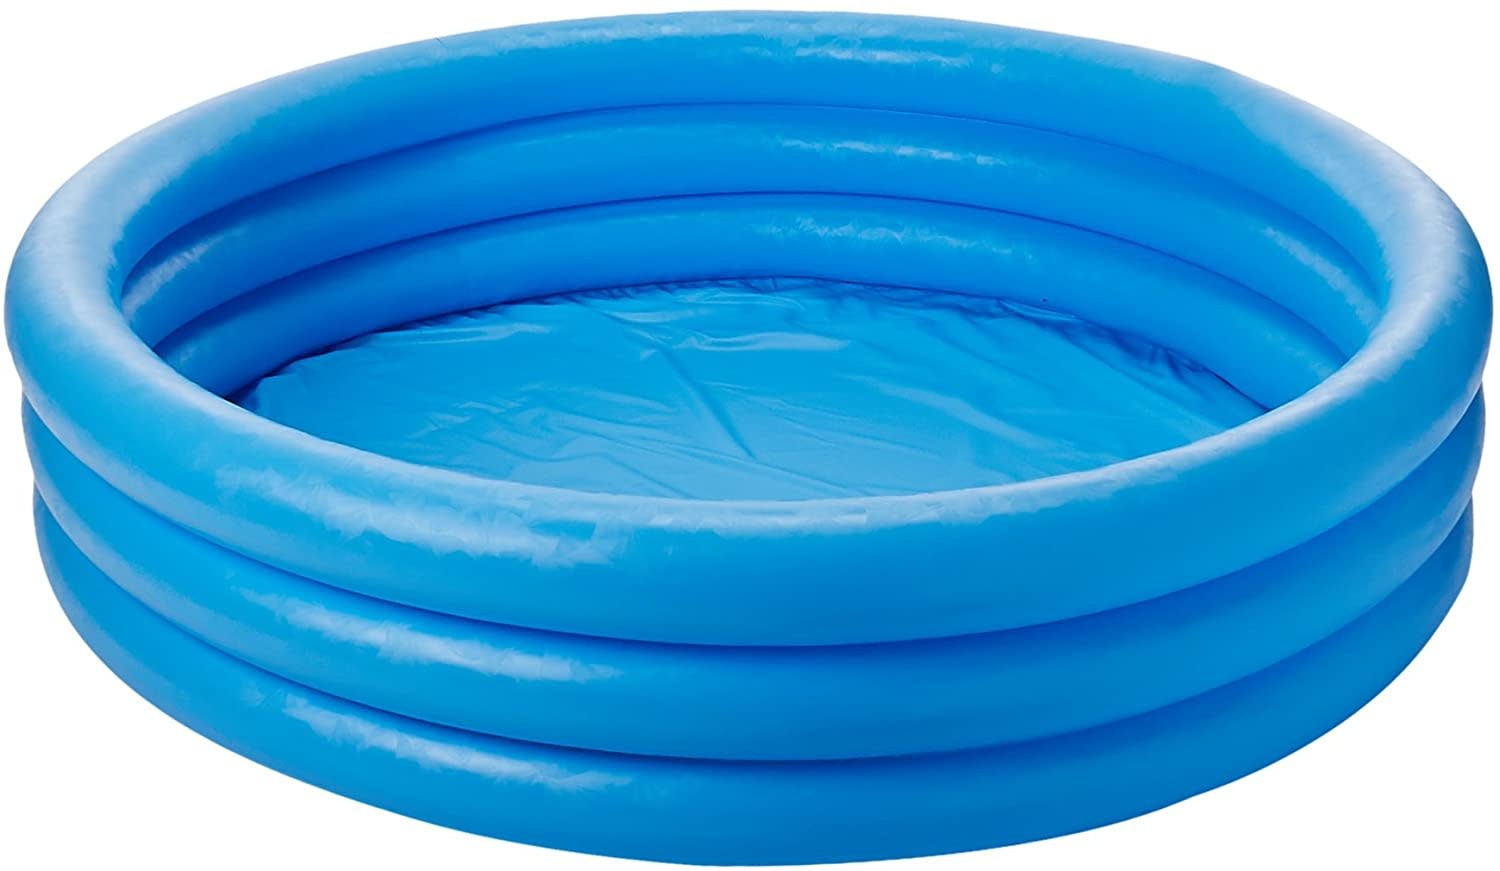 INTEX Intex Crystal Blue Inflatable Pool, 45 x 10"